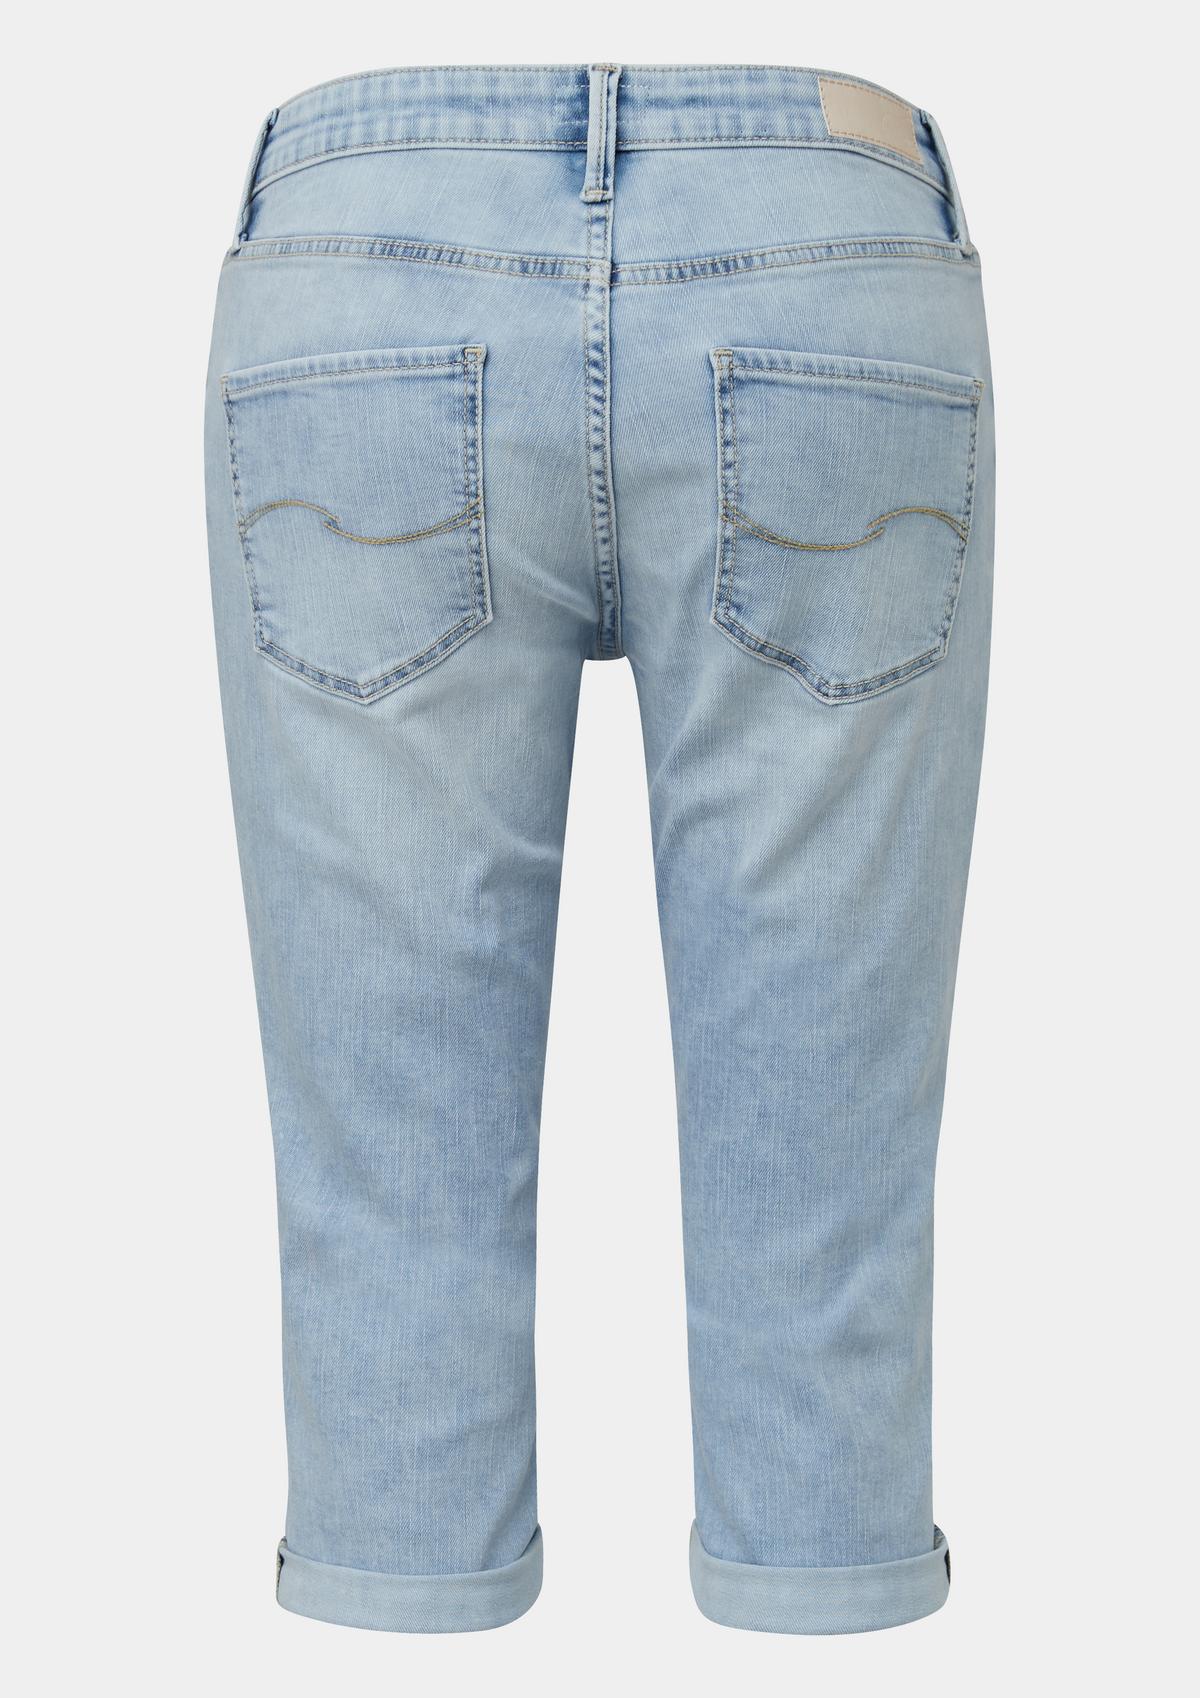 s.Oliver Catie capri jeans / mid rise / slim leg / decorative stitching